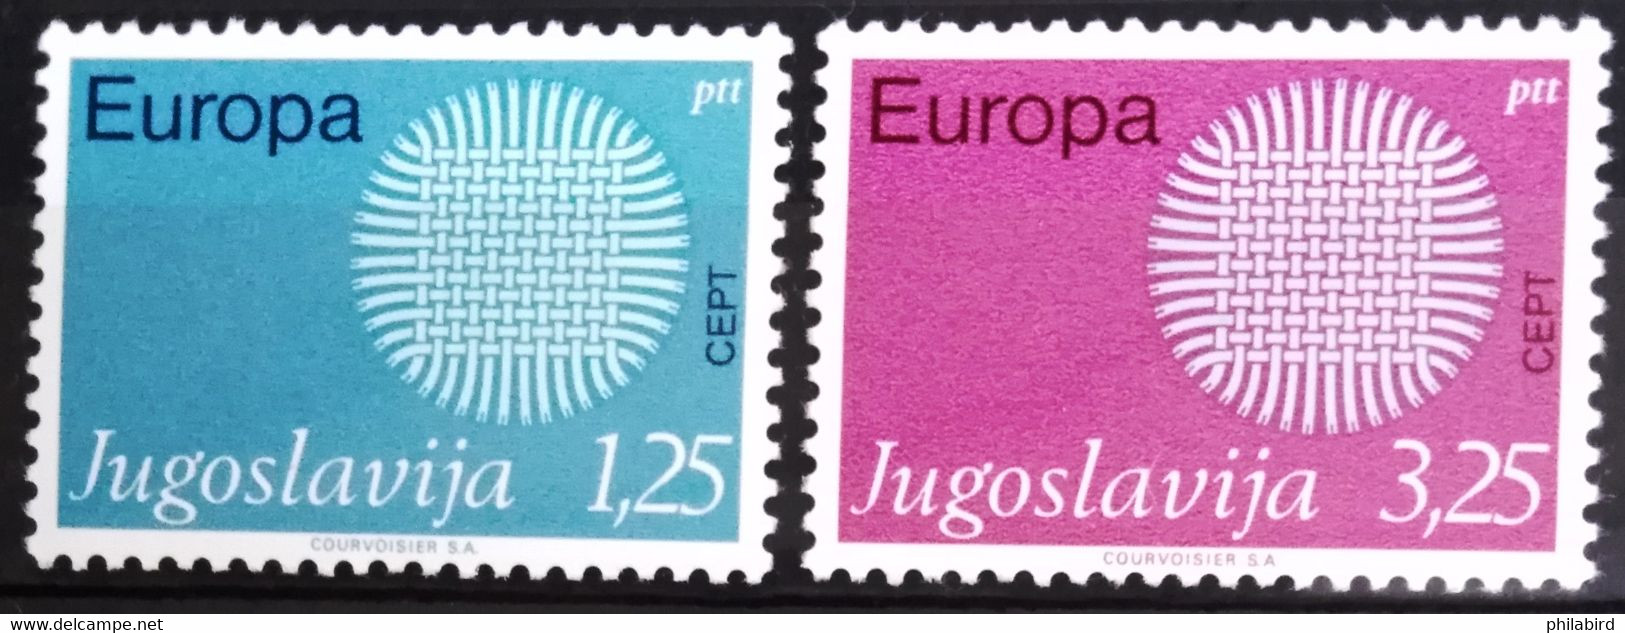 EUROPA 1970 - YOUGOSLAVIE                   N° 1269/1270                      NEUF* - 1970